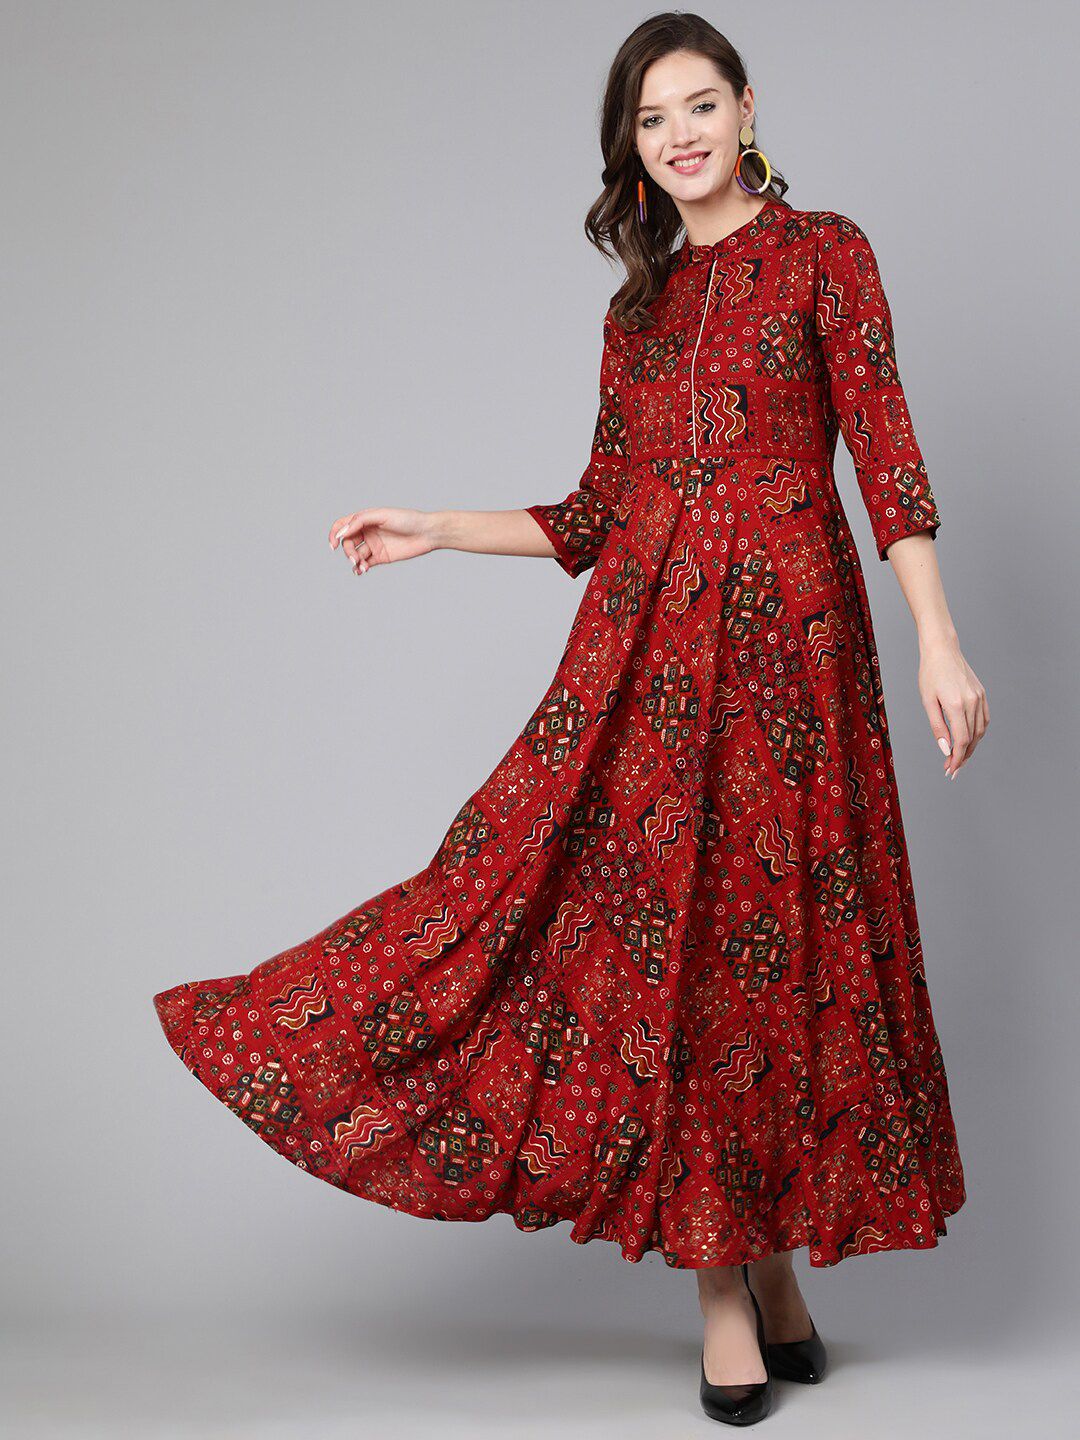 Nayo Red Ethnic Motifs Ethnic Maxi Dress Price in India